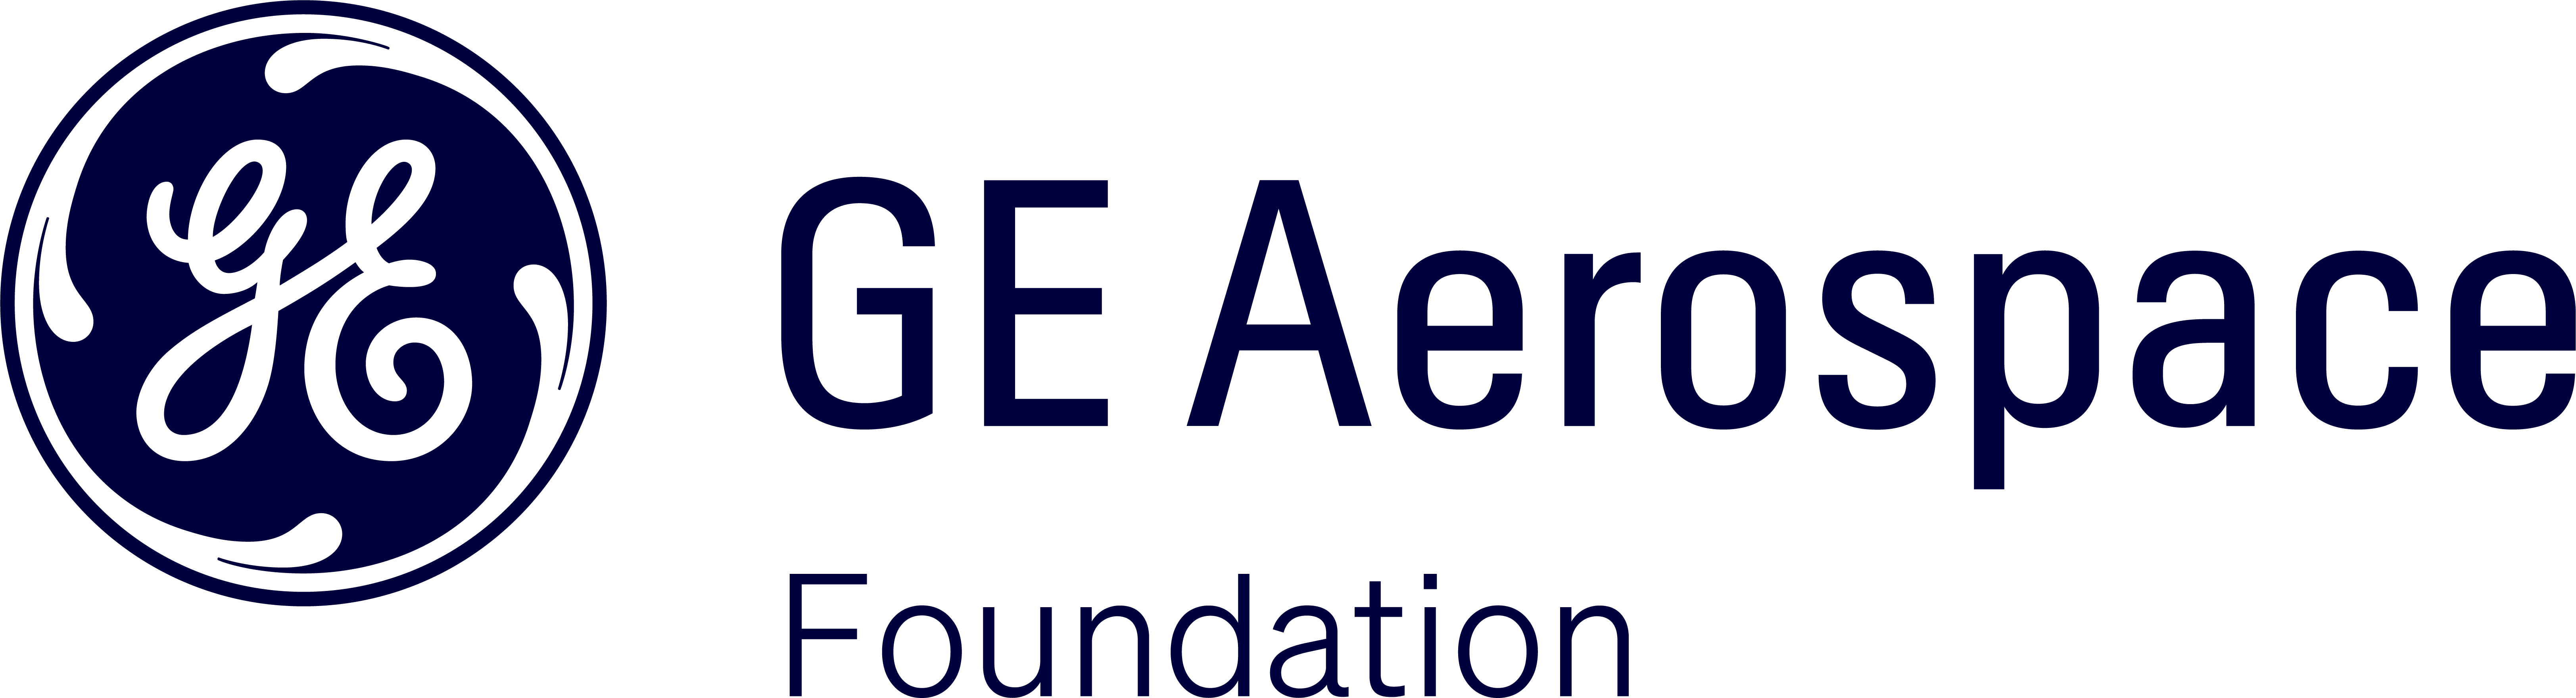 GE Aerospace Foundation logo in navy blue